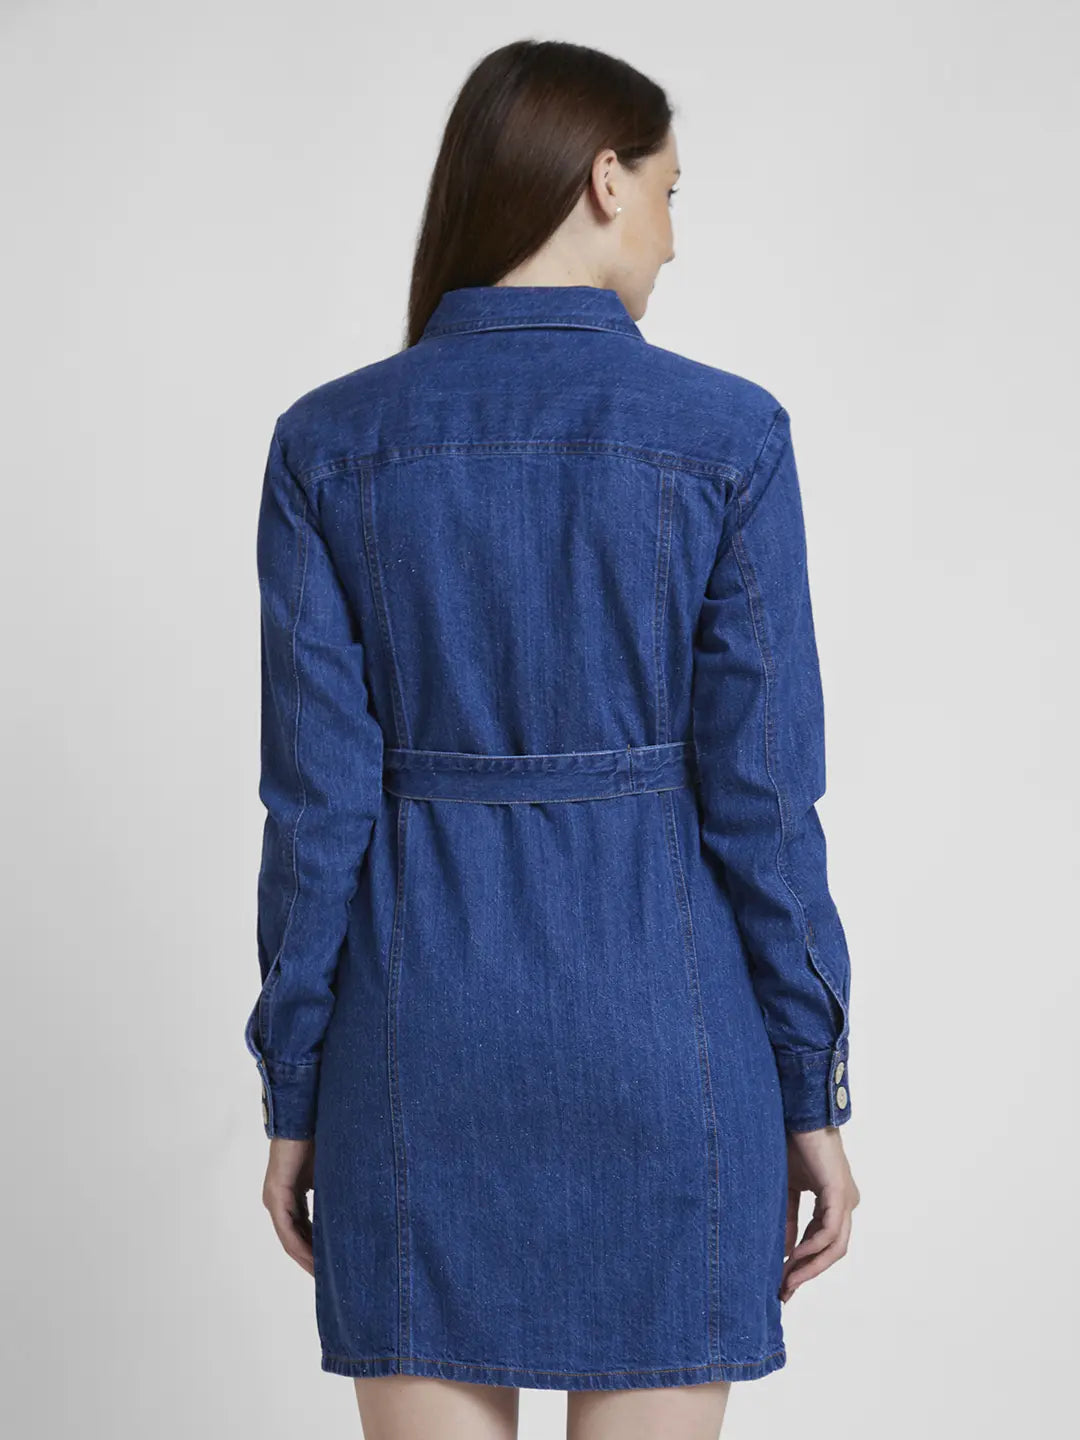 Avon Women's Summer Dress Dark Blue Denim Jeanetic Flared Midi Dress S –  Worsley_wear